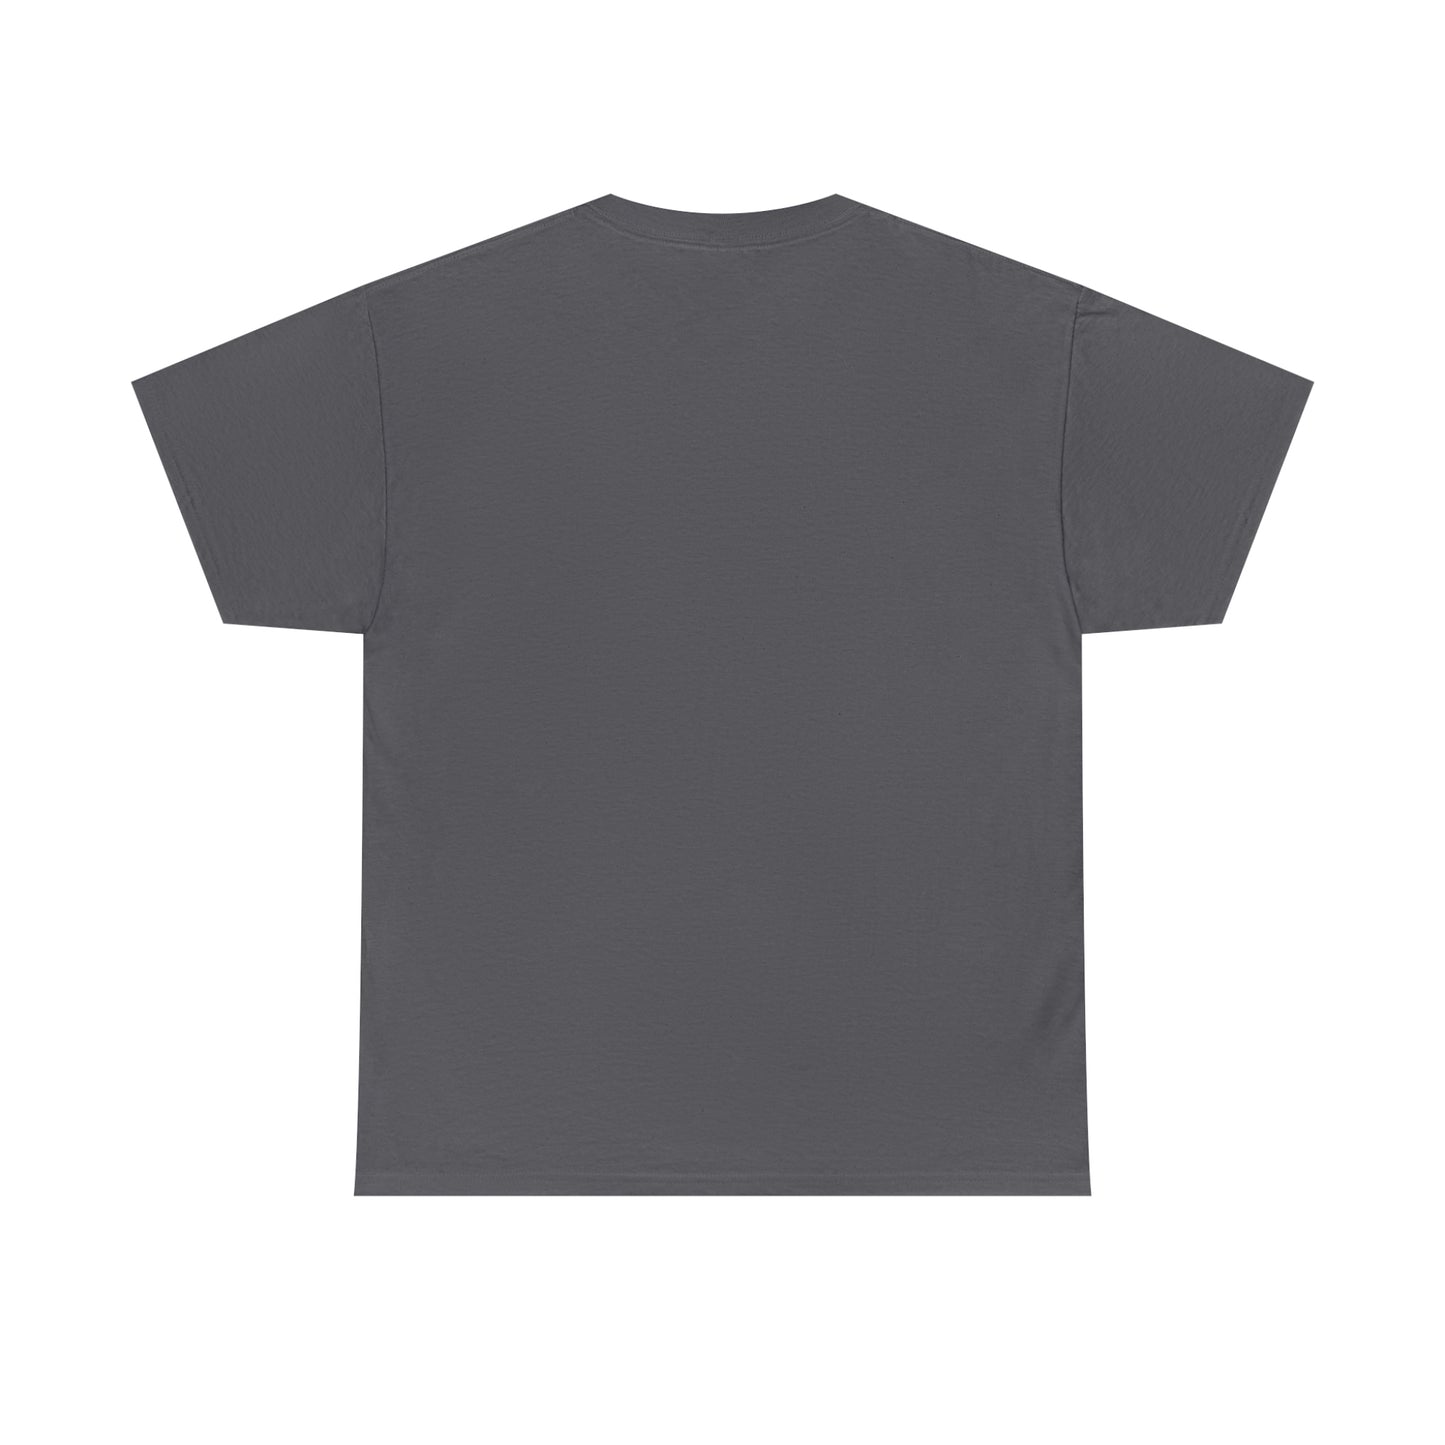 PHENOMENALLY AUTISTIC | Black T-Shirt